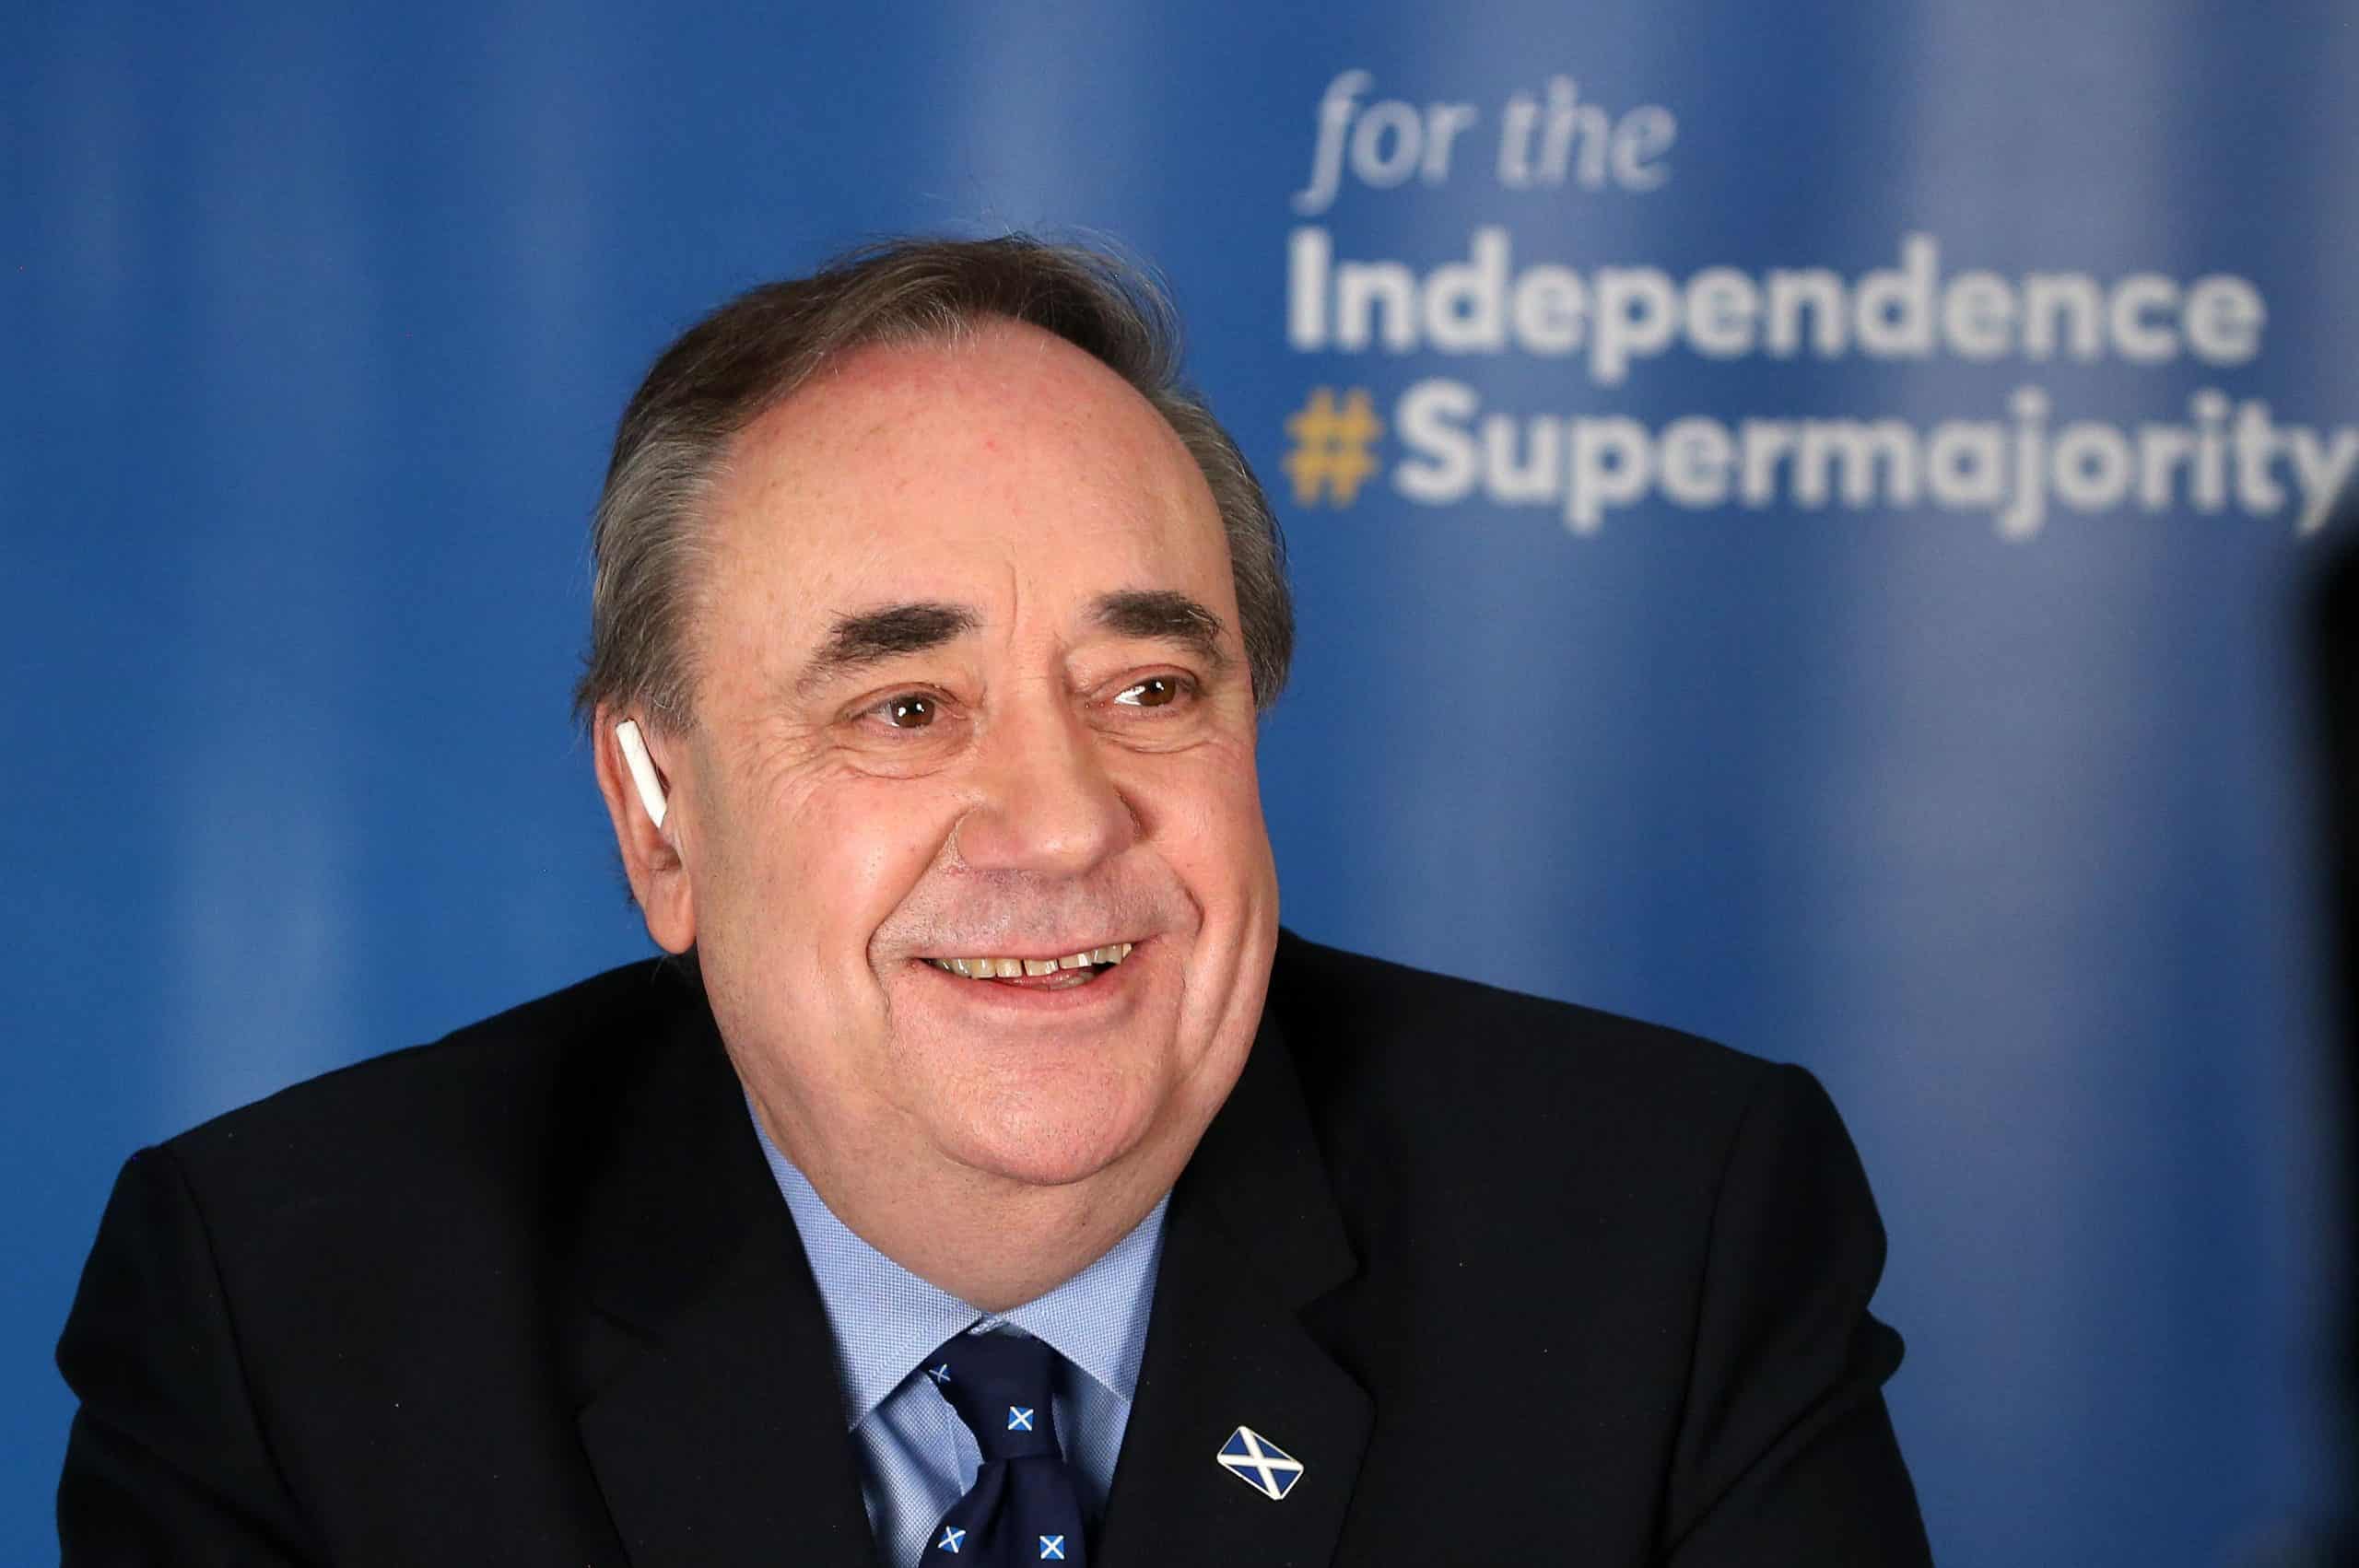 Bewilderment as Alex Salmond claims the endorsement of Robert the Bruce